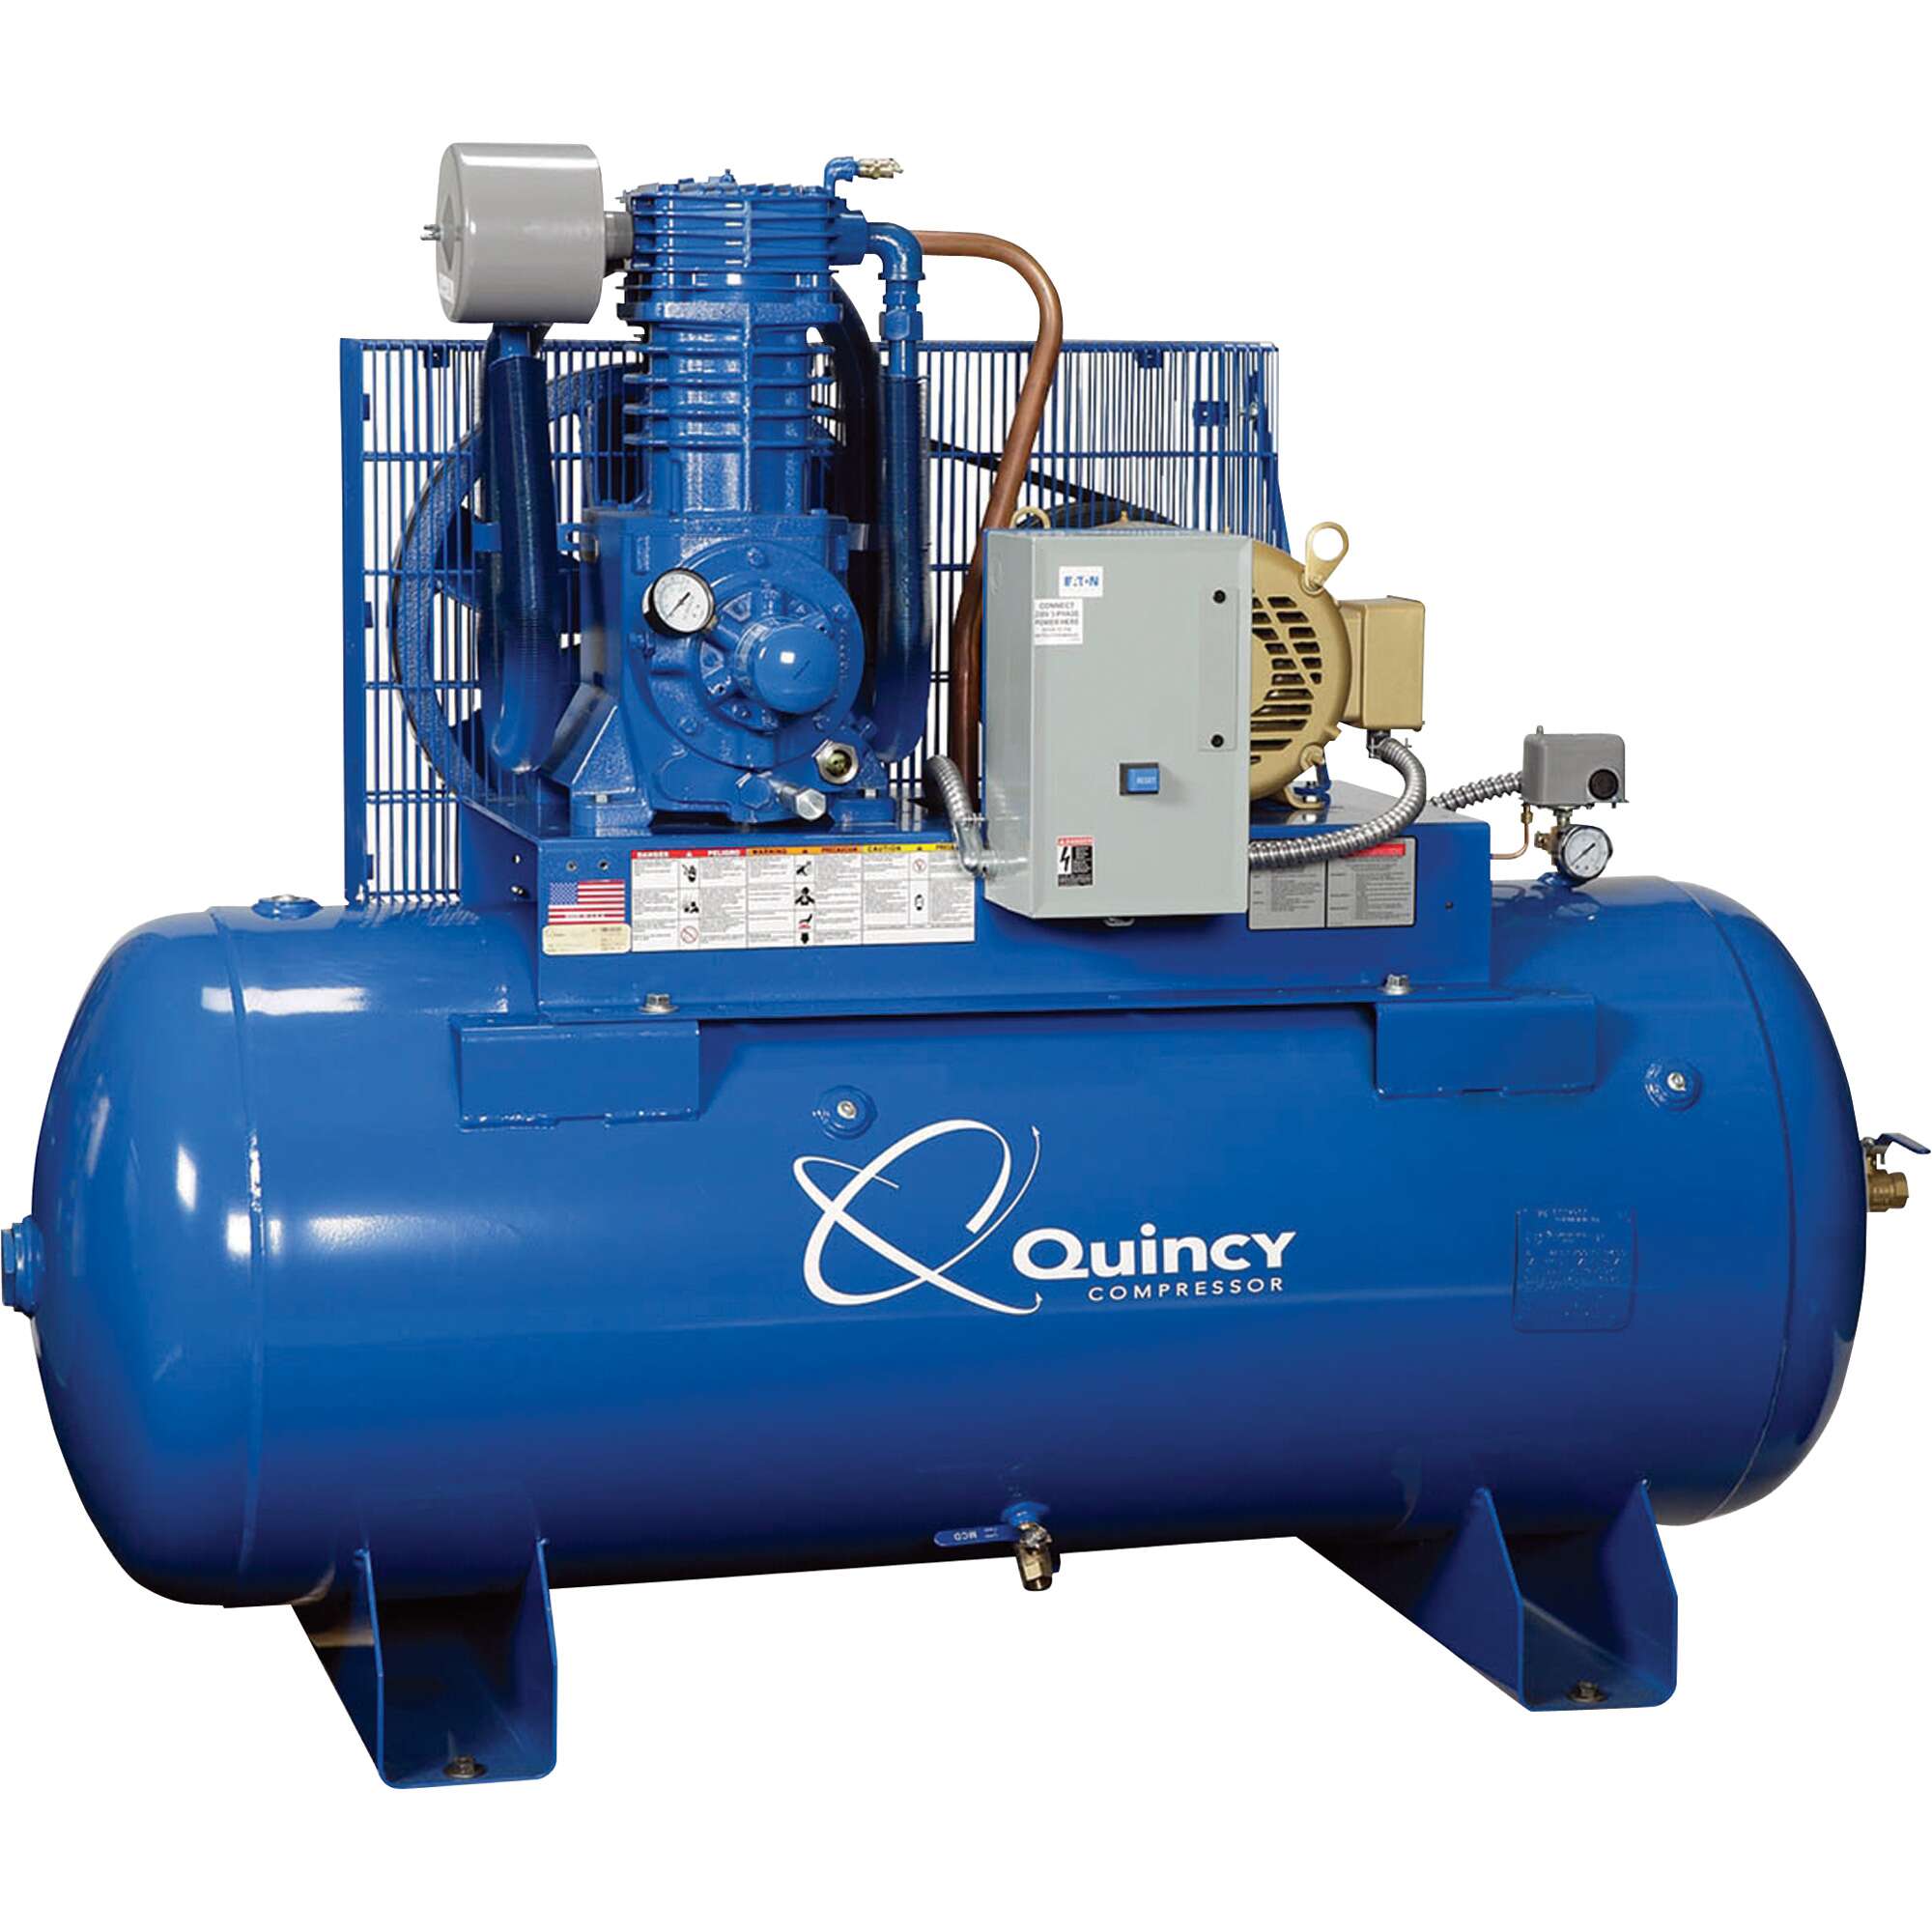 Quincy Compressor QP Pressure Lubricated Reciprocating Air Compressor 10 HP 200 208 Volt 3 Phase 120 Gallon Horizontal